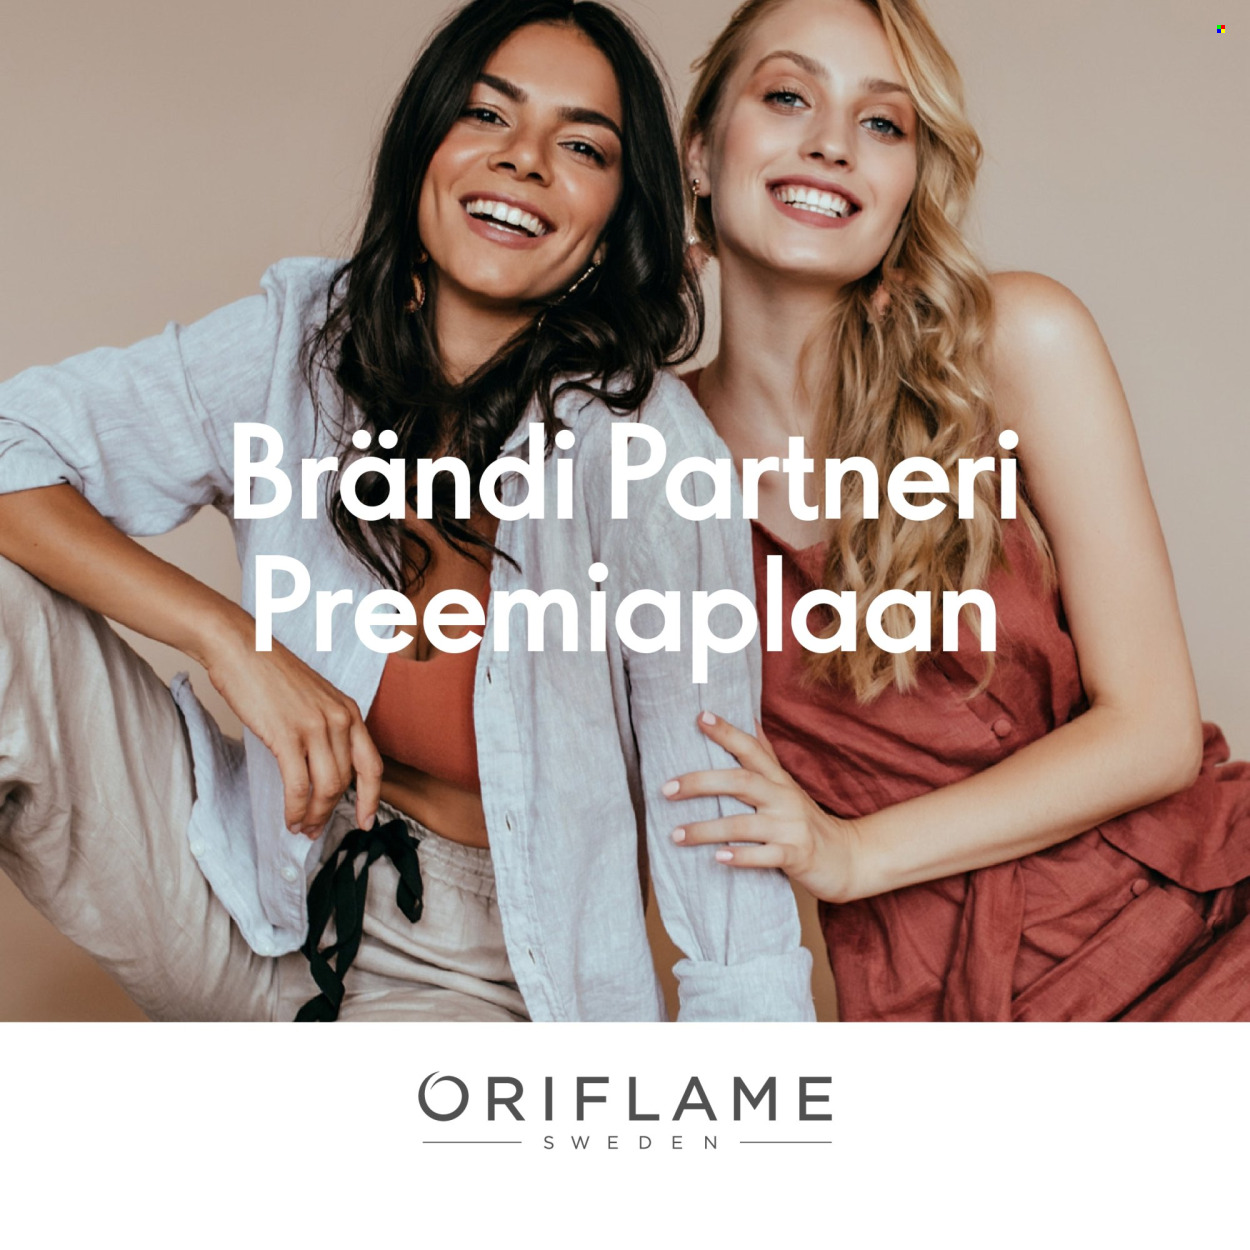 oriflame - Oriflame kliendileht - Brändi Partneri Preemiaplaan